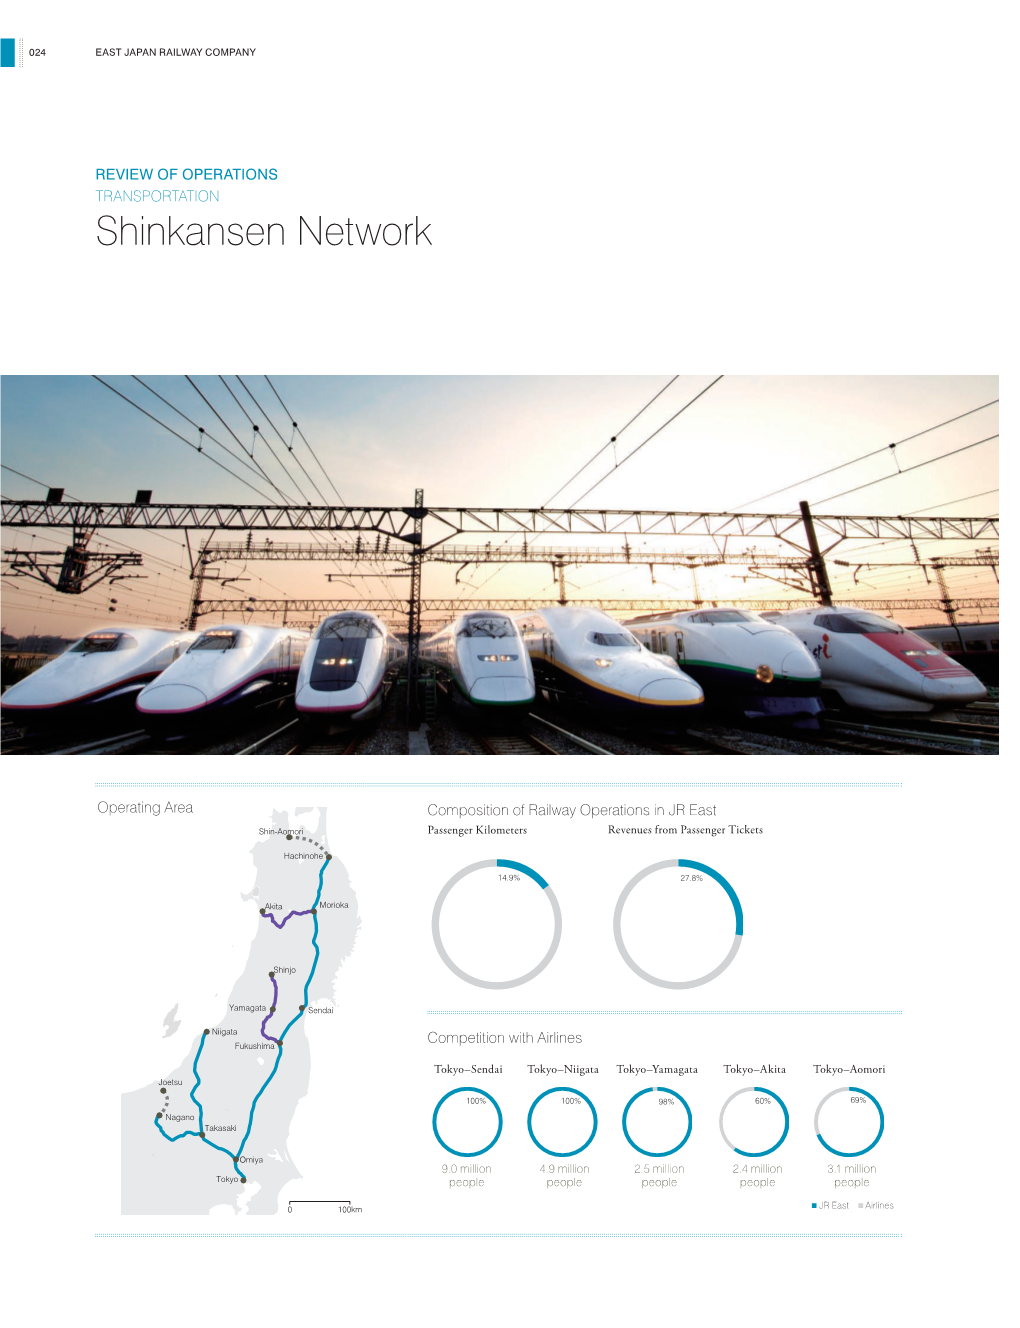 Shinkansen Network